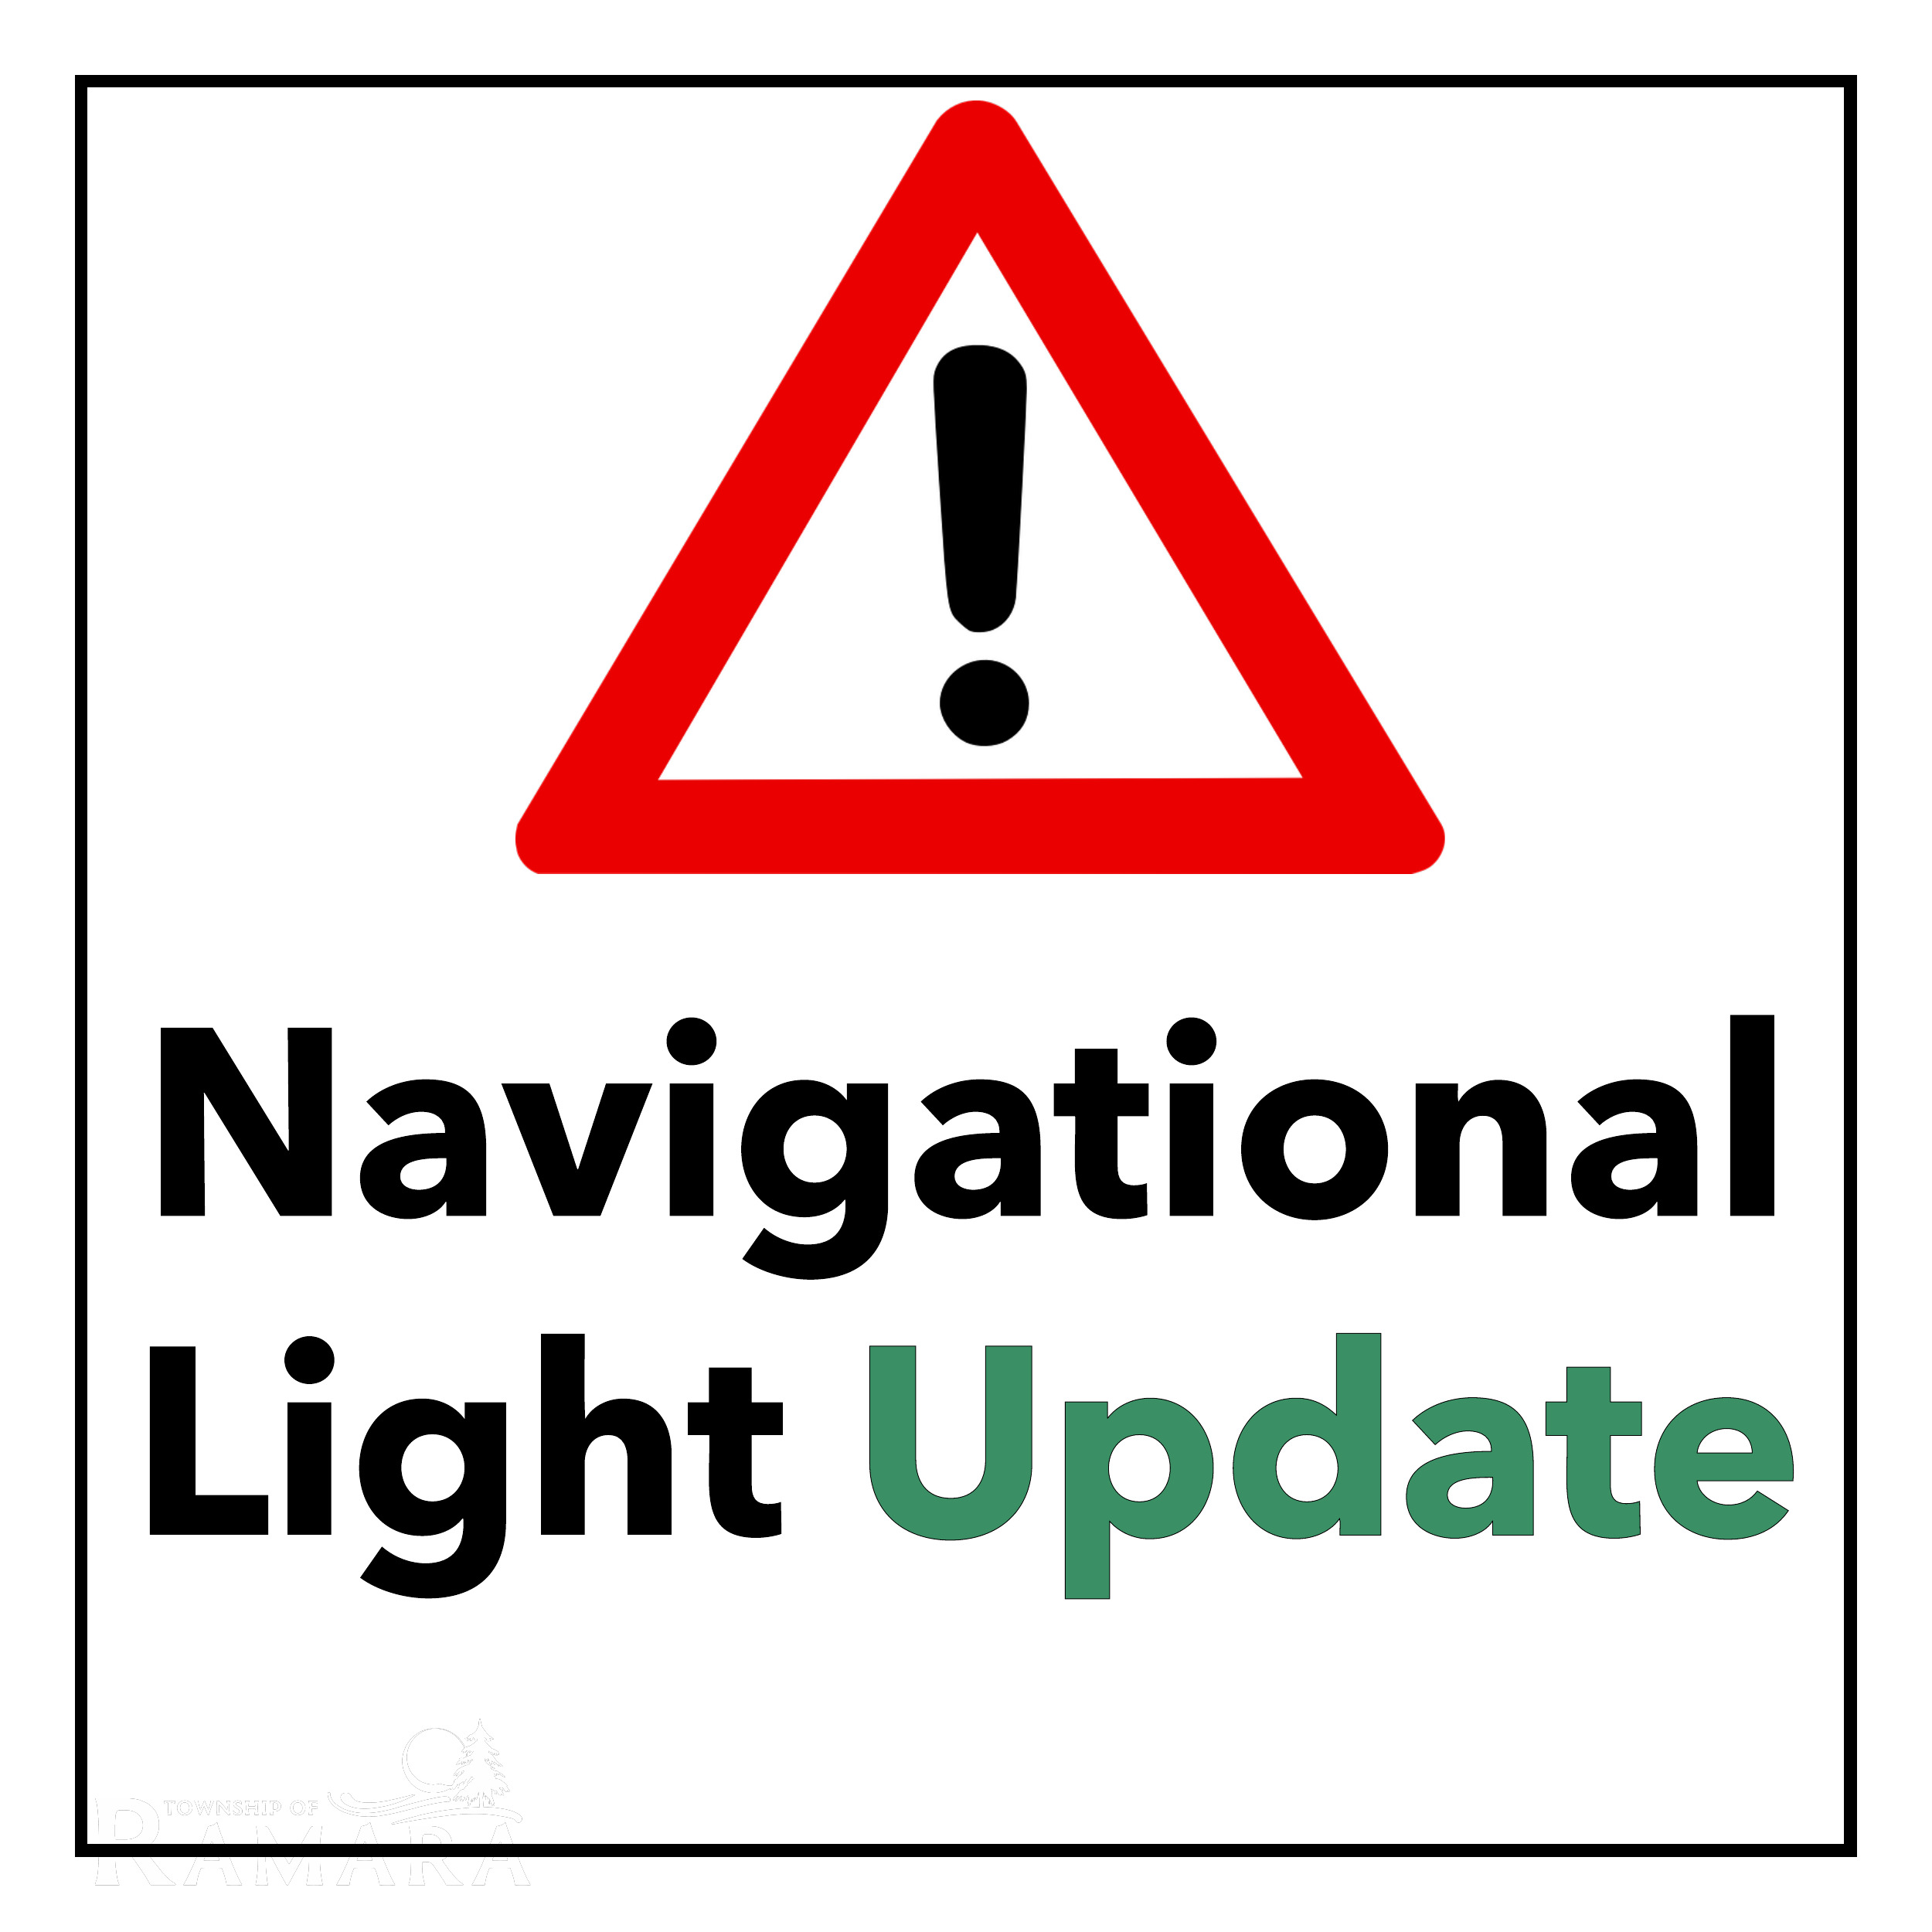 Navigational light update with a caution symbol